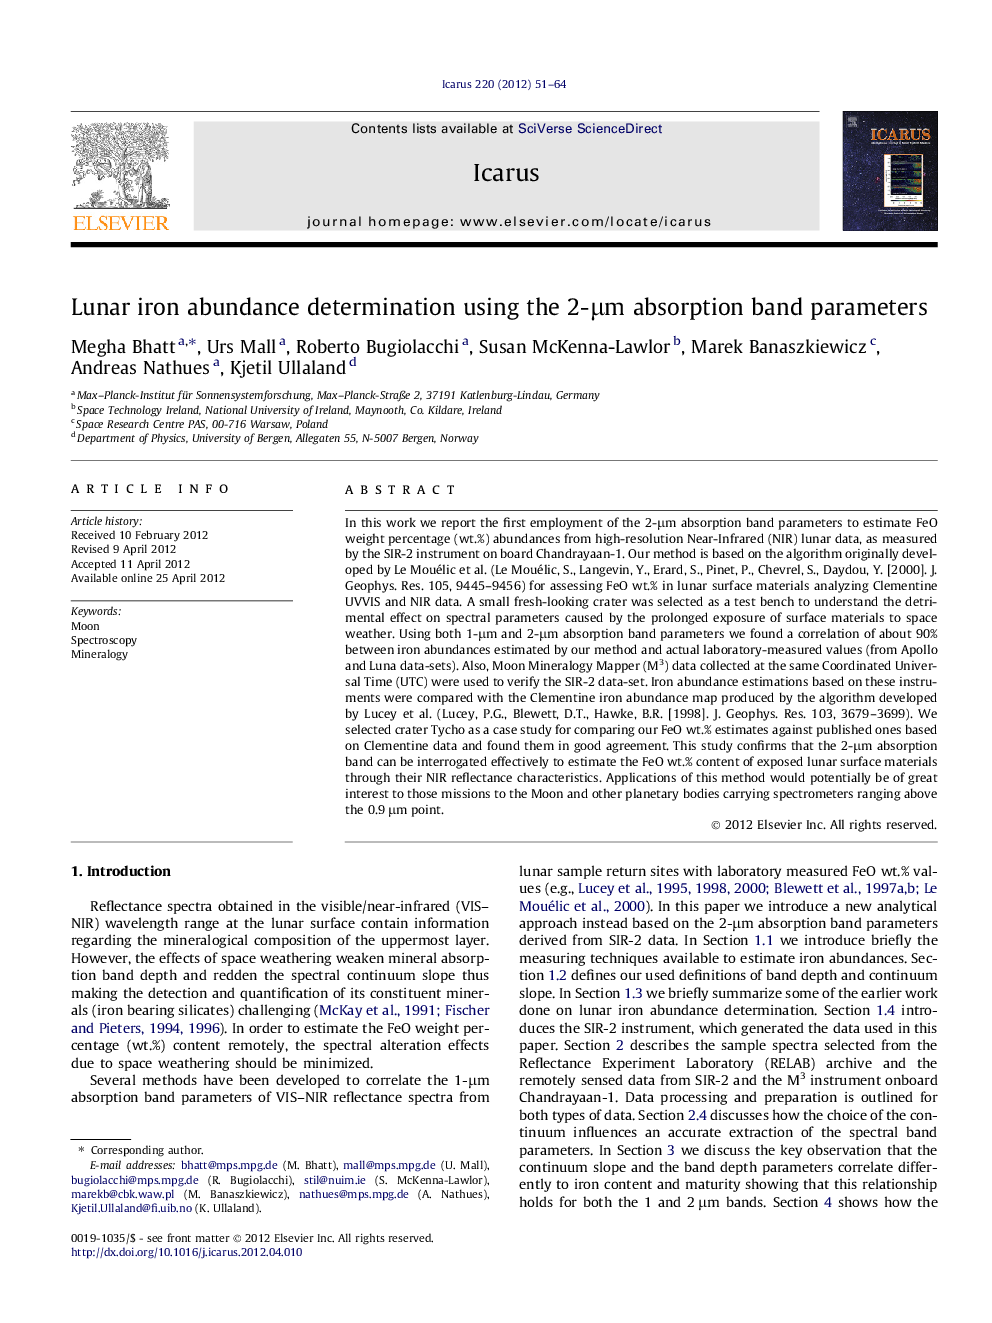 Lunar iron abundance determination using the 2-Î¼m absorption band parameters